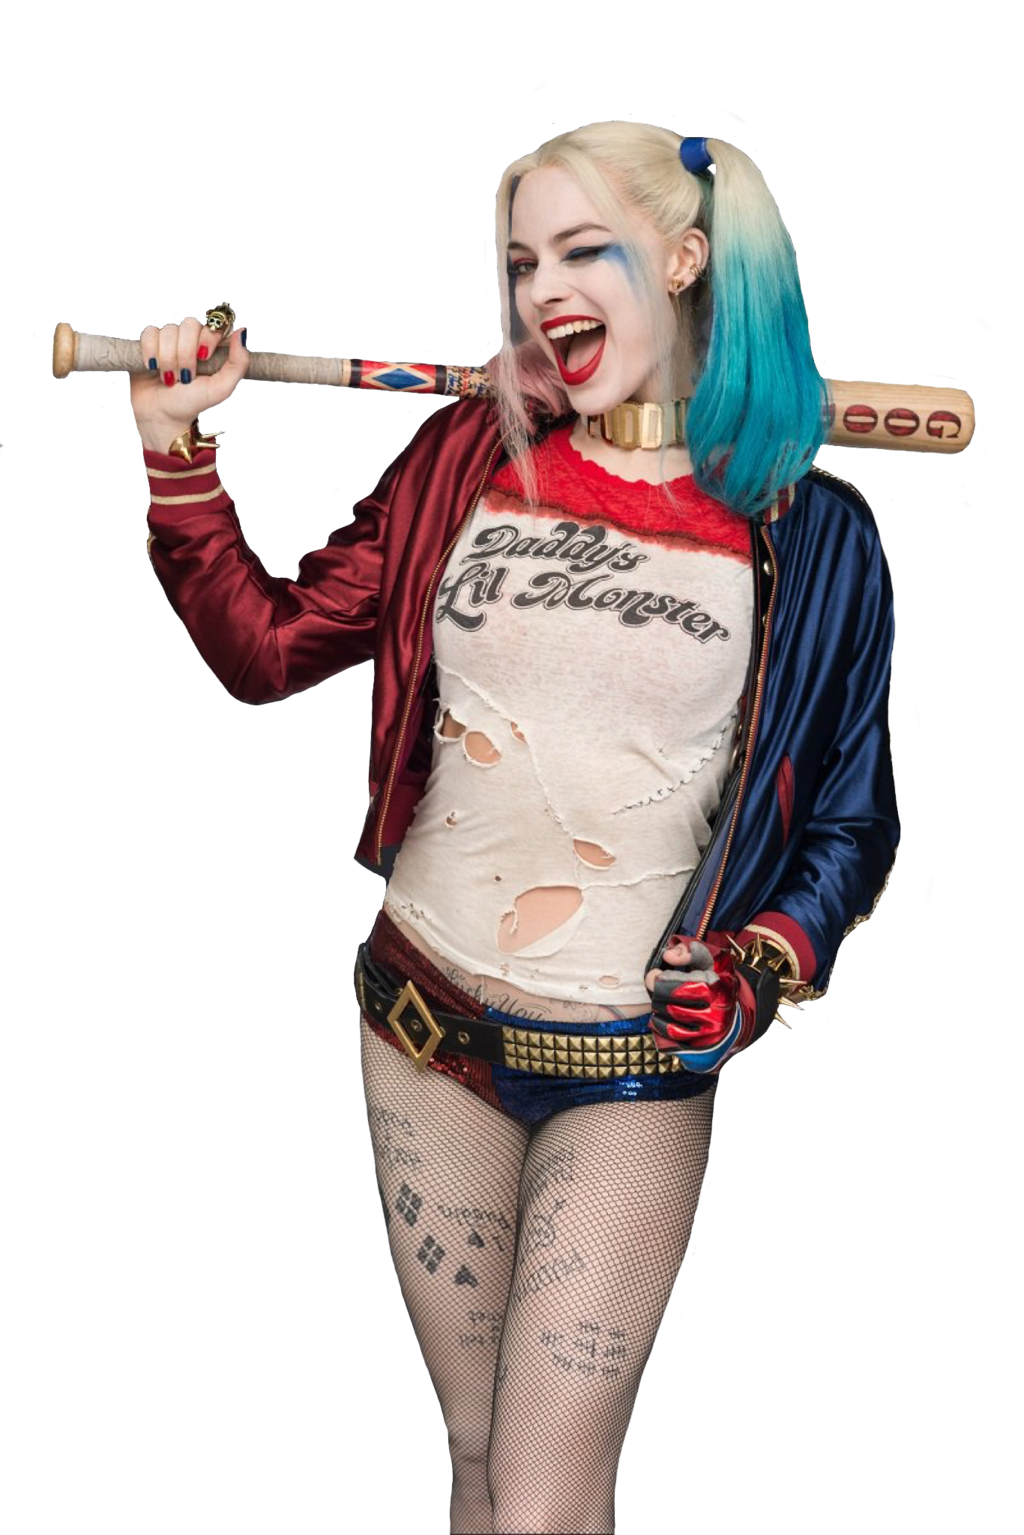 Harley Quinn PNG images Download 